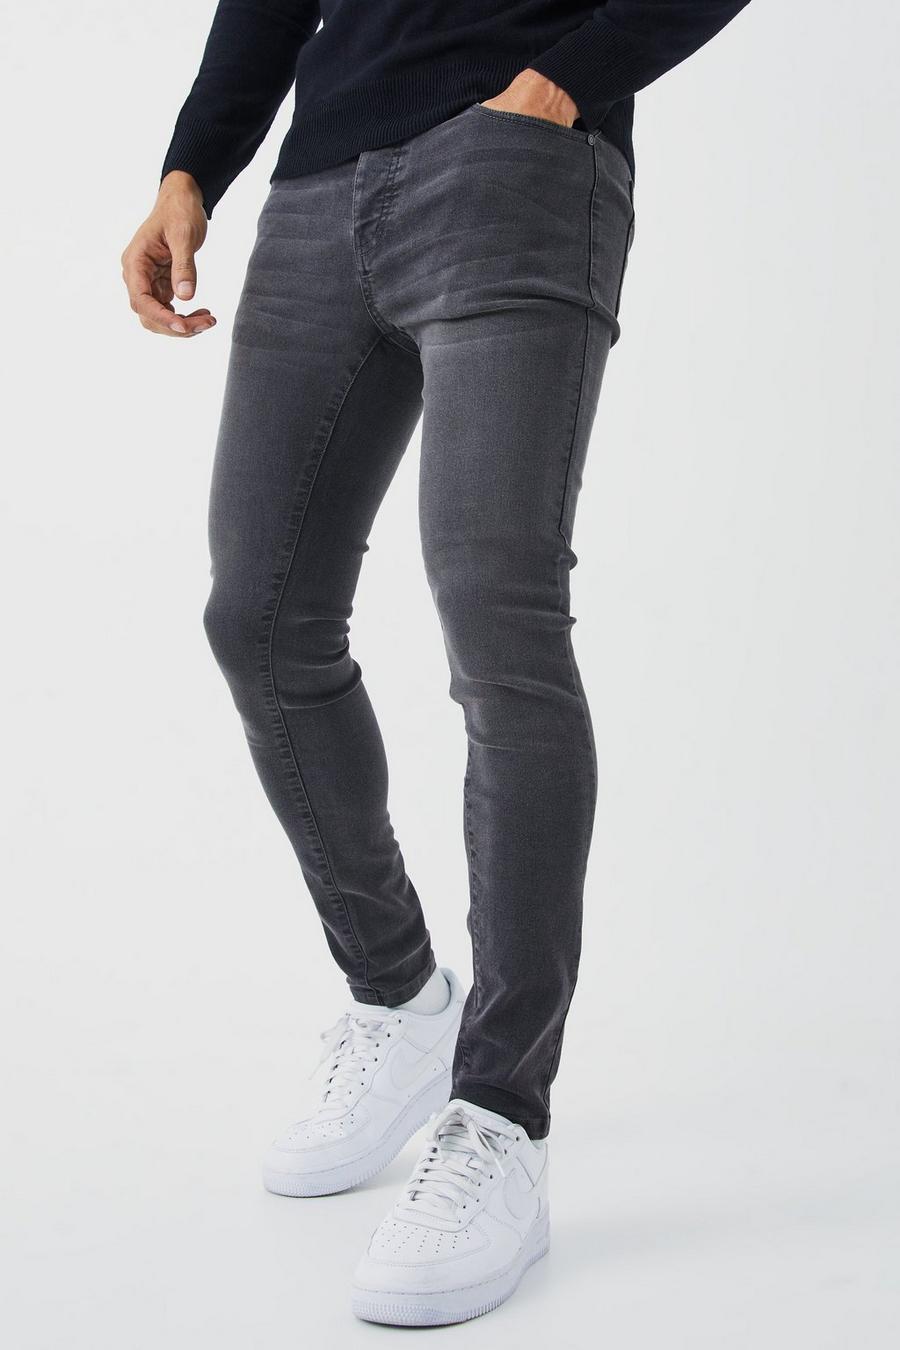 Charcoal gris Super Skinny Stretch Jean